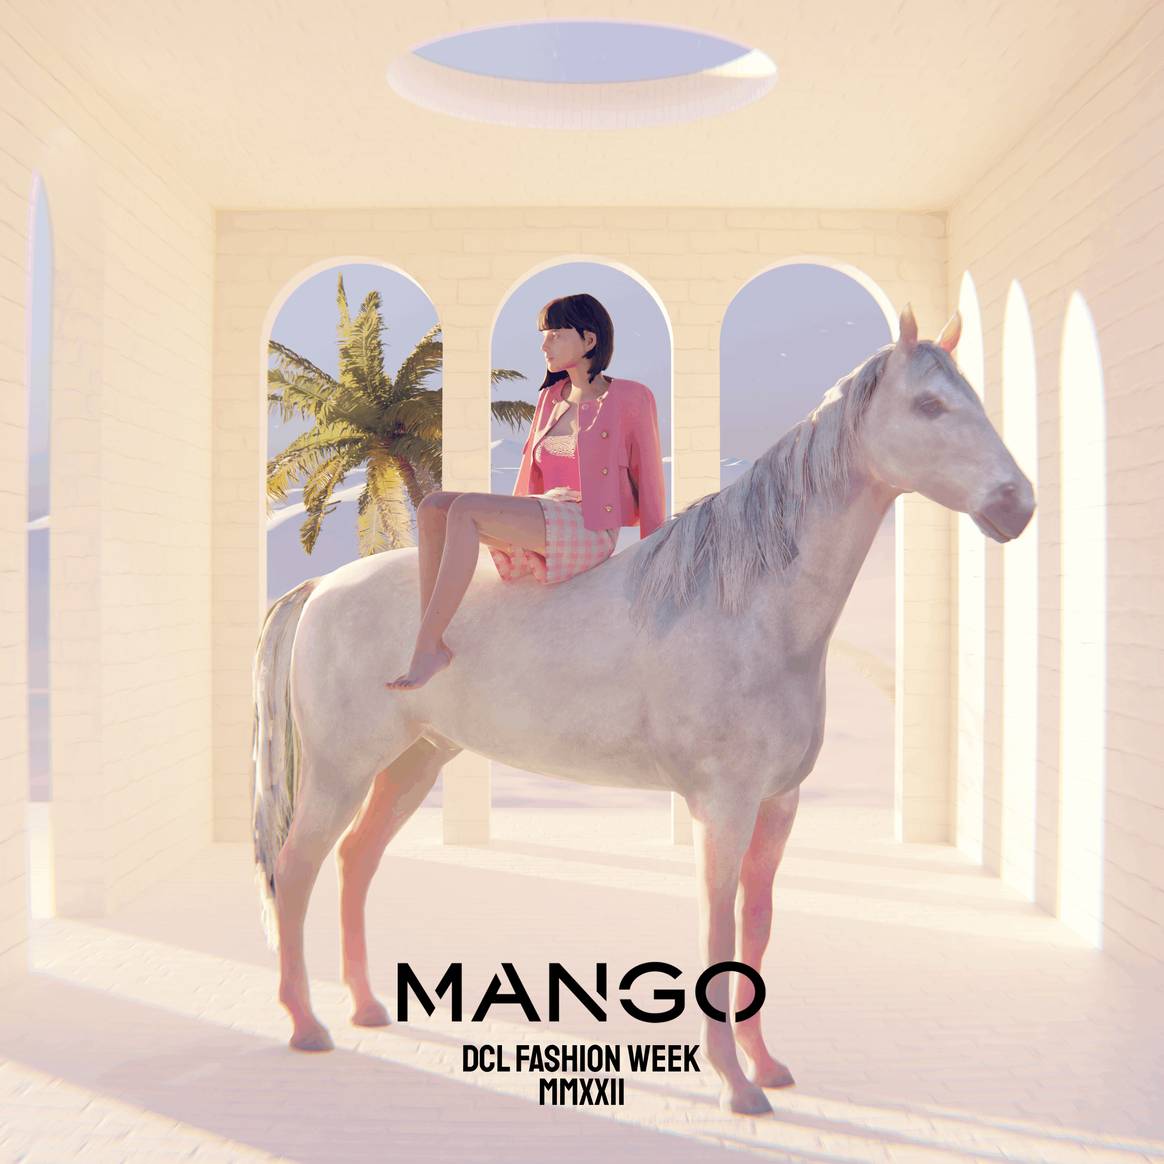 "Hanna in the Clouds", œuvre de Farkas pour Mango, image courtesy of Mango